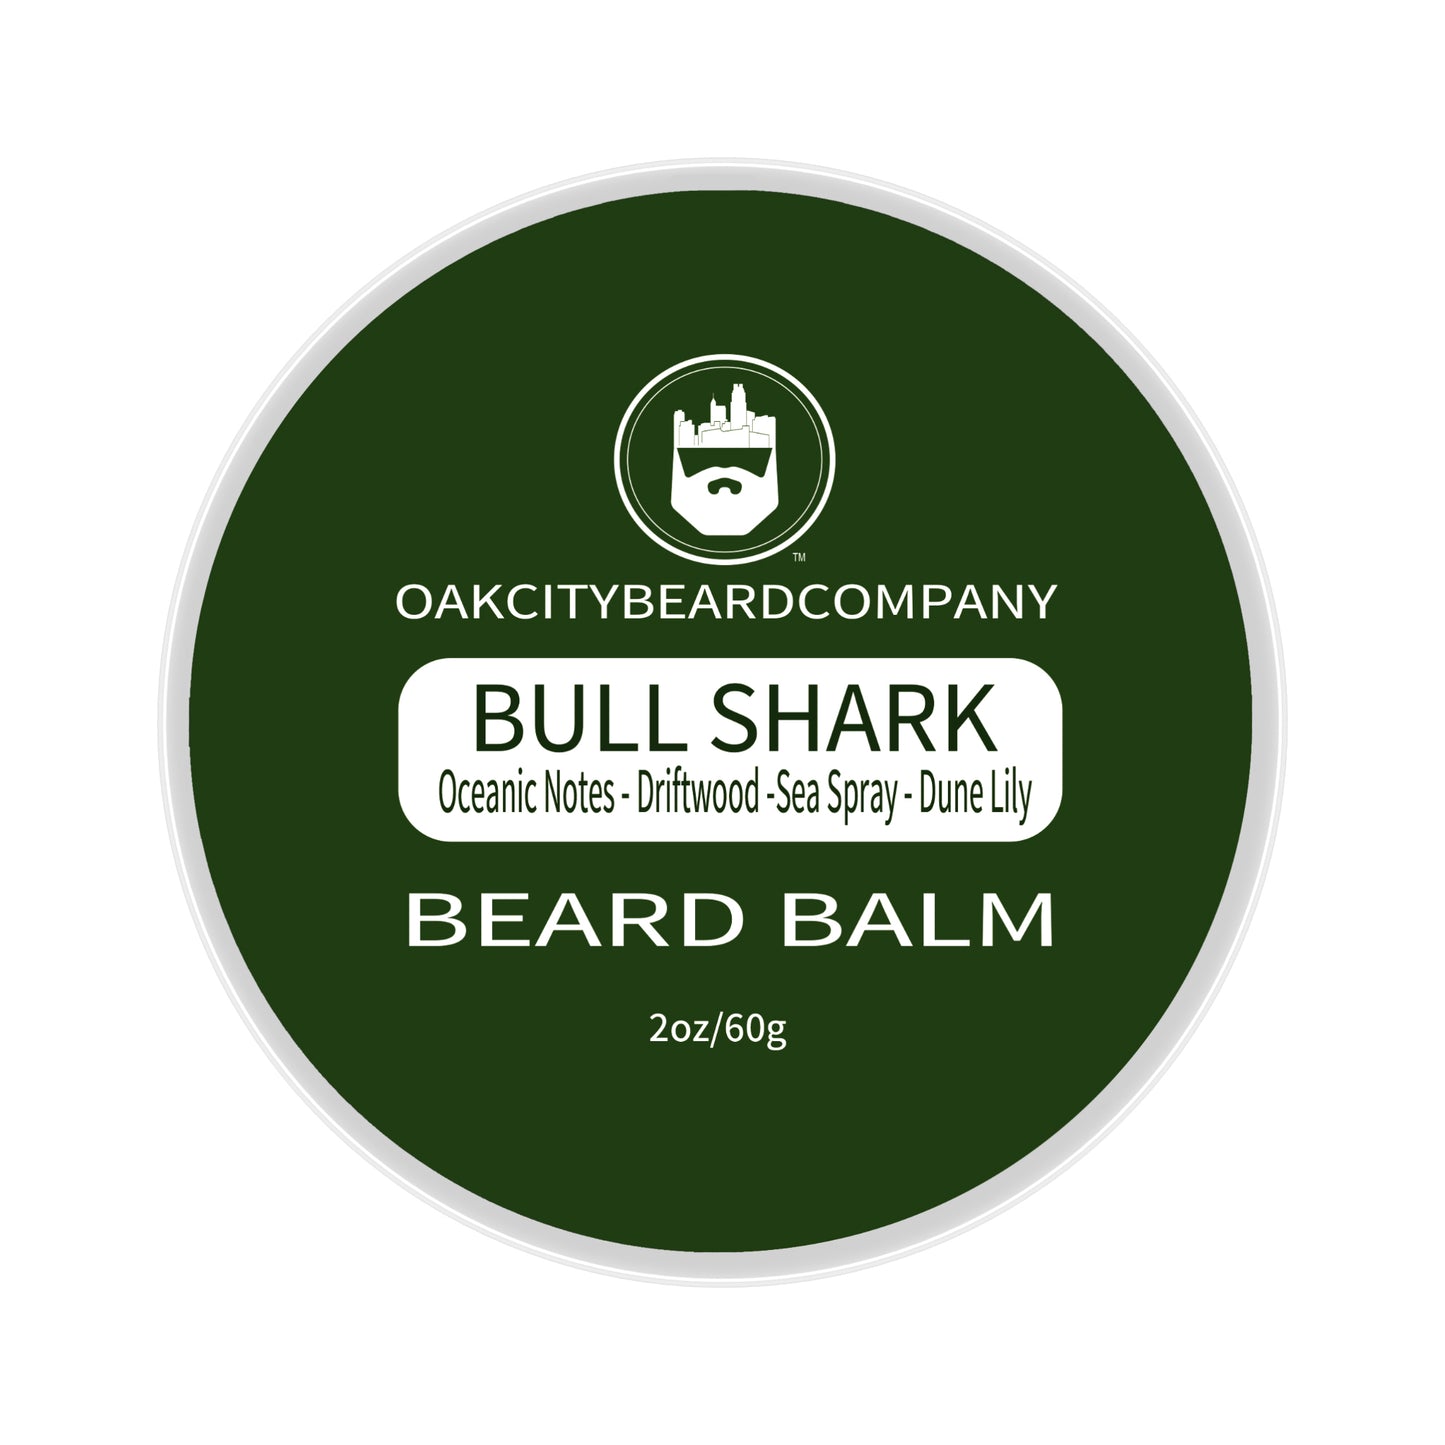 Bull Shark (Beard Balm) by Oak City Beard Company